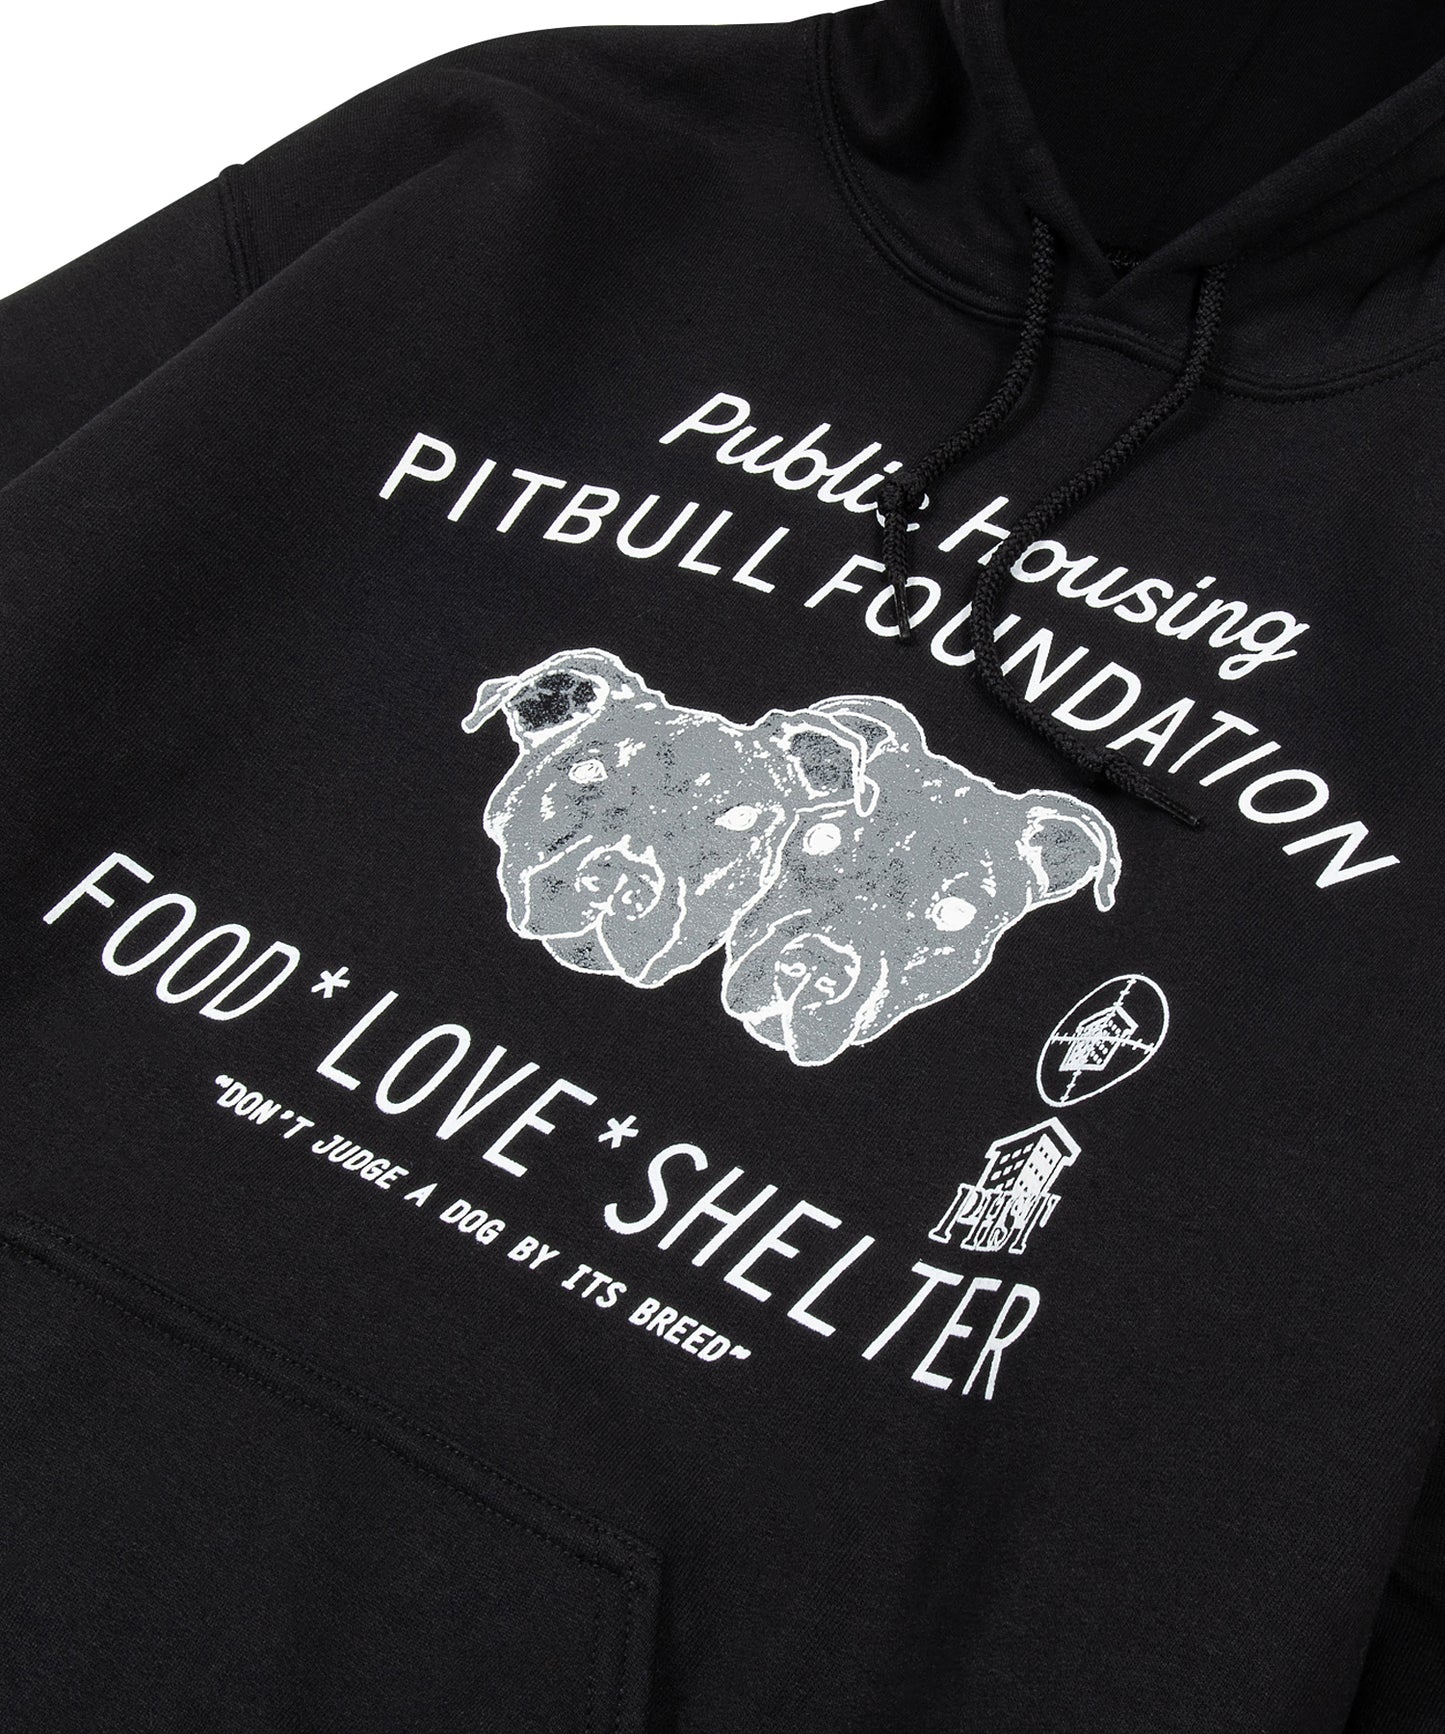 Public Housing Skate Team Pitbull Foundation Hoodie Black